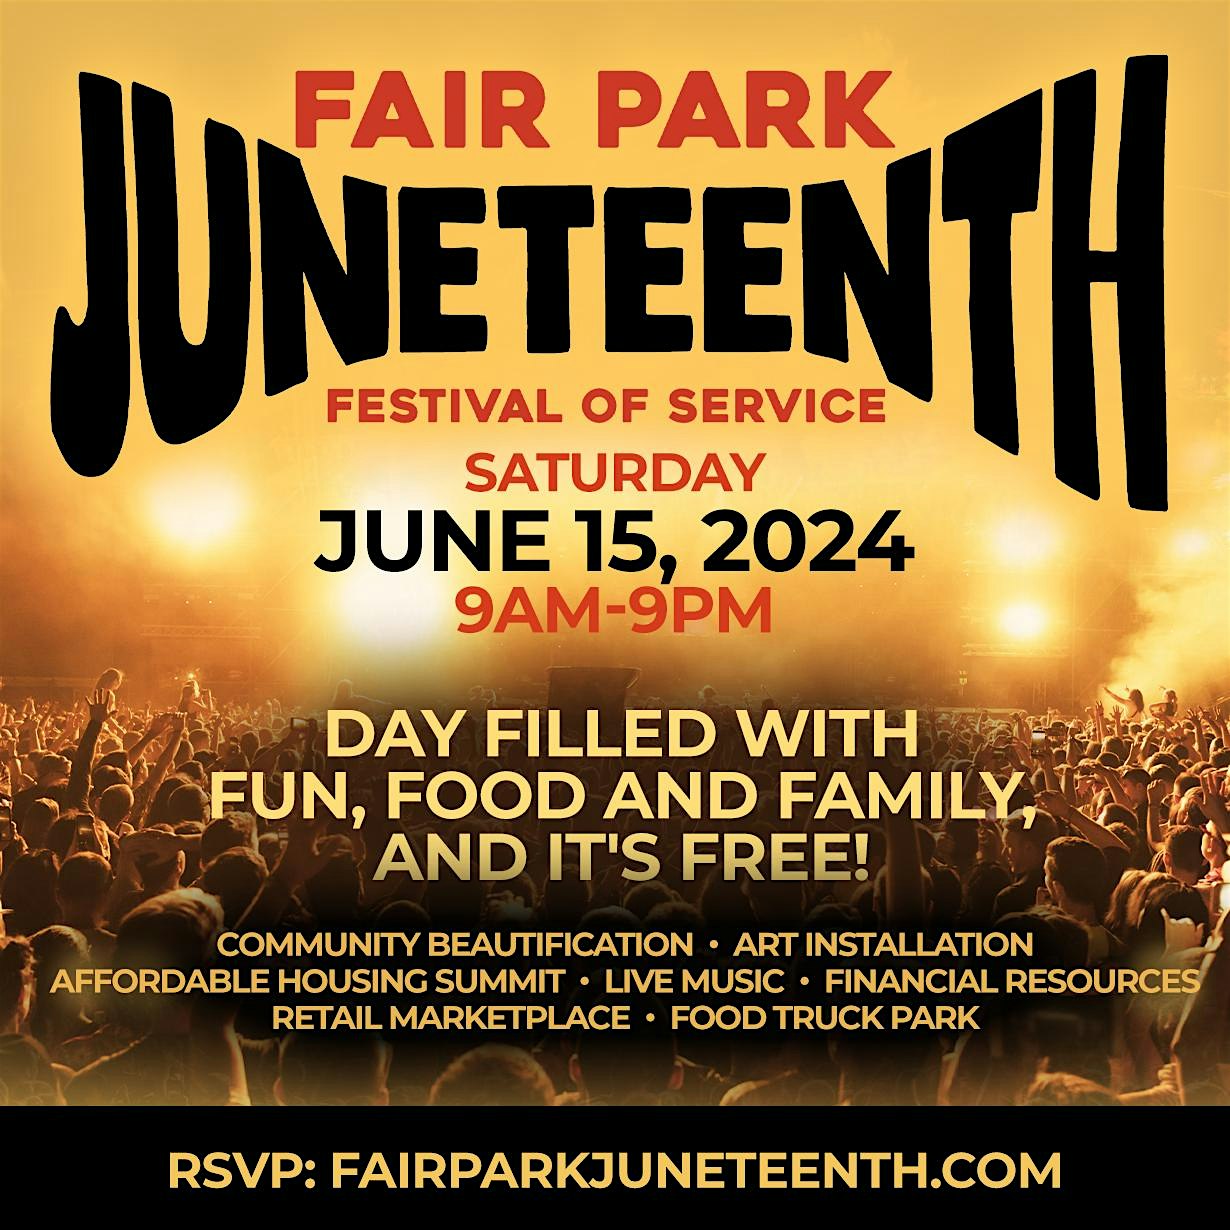 Fair Park Juneteenth Festival of Service